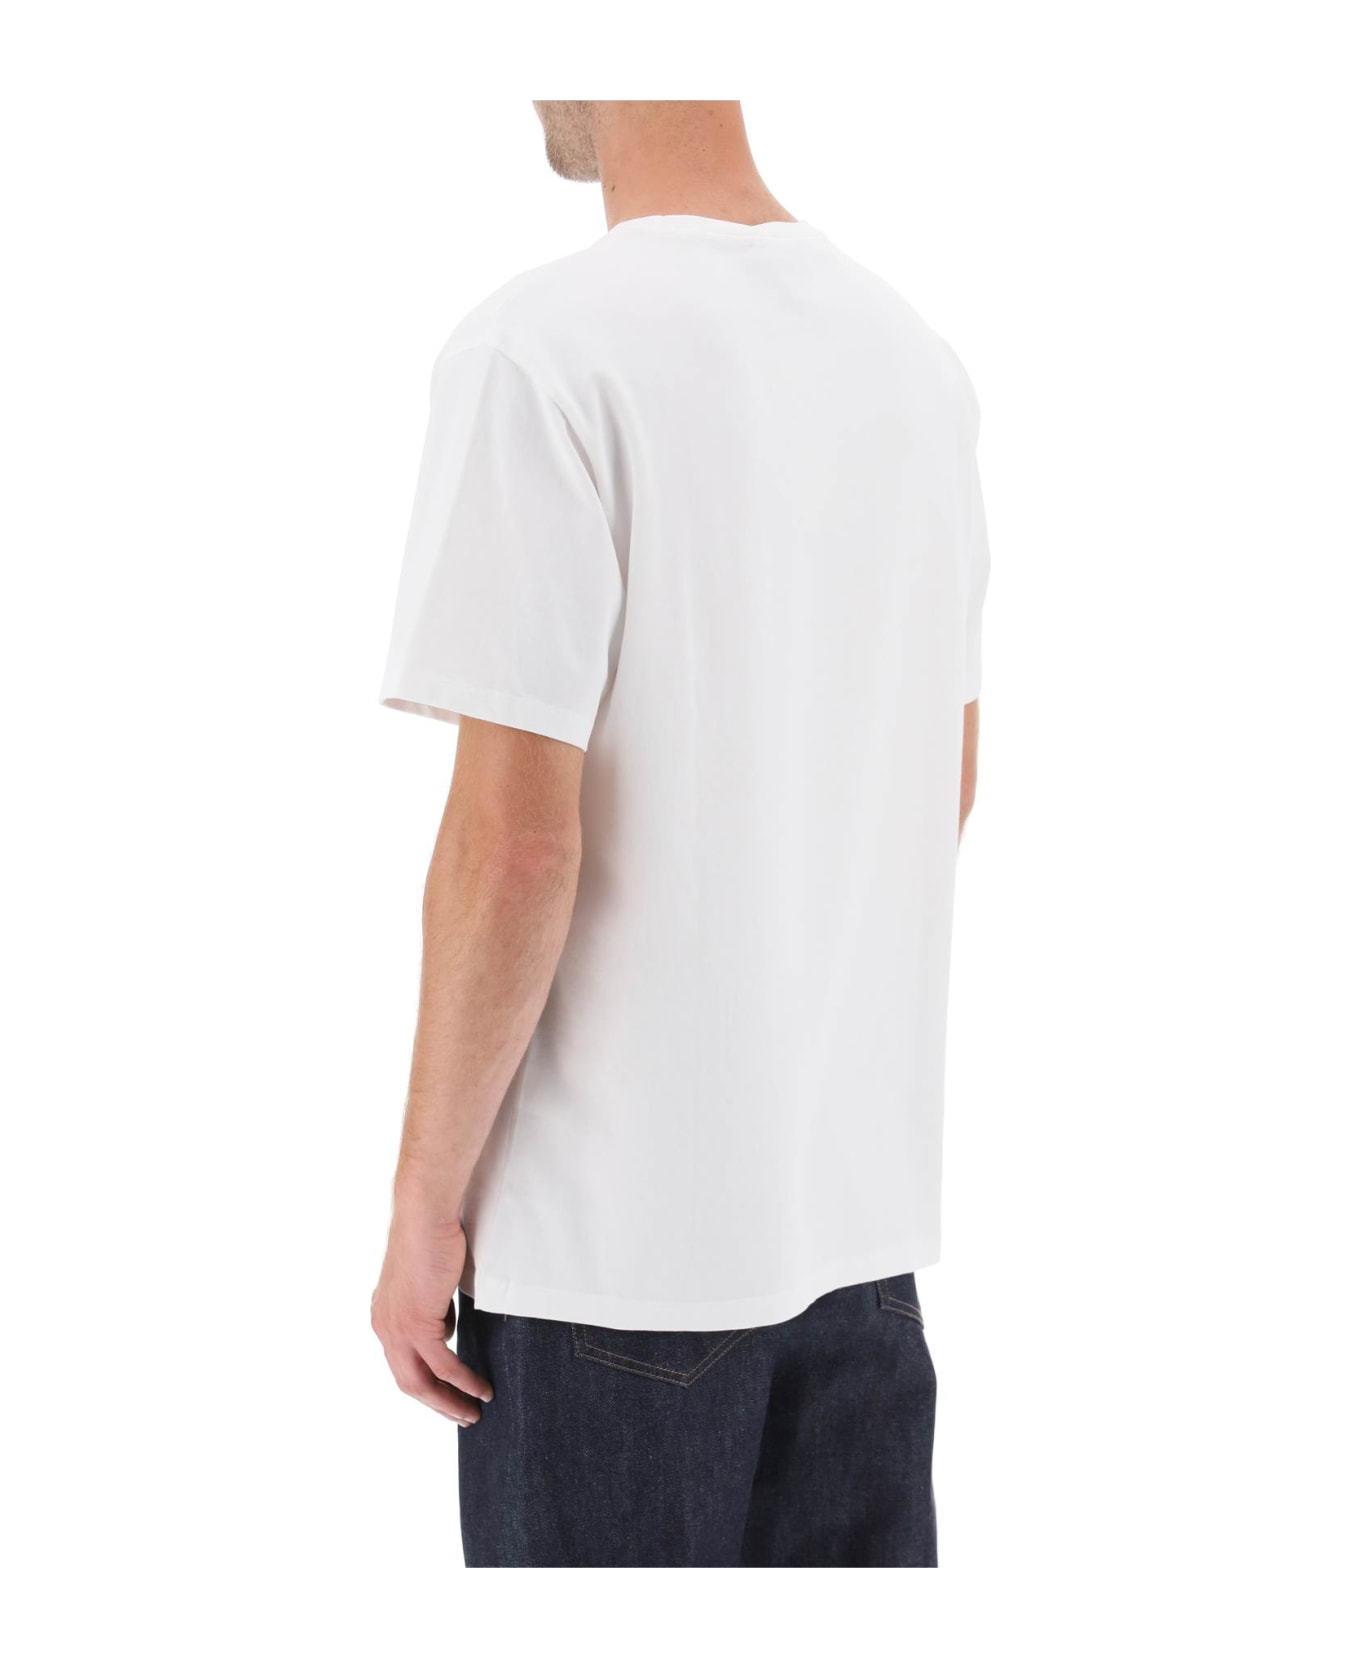 Maison Kitsuné T-shirt With Campus Fox Print - White